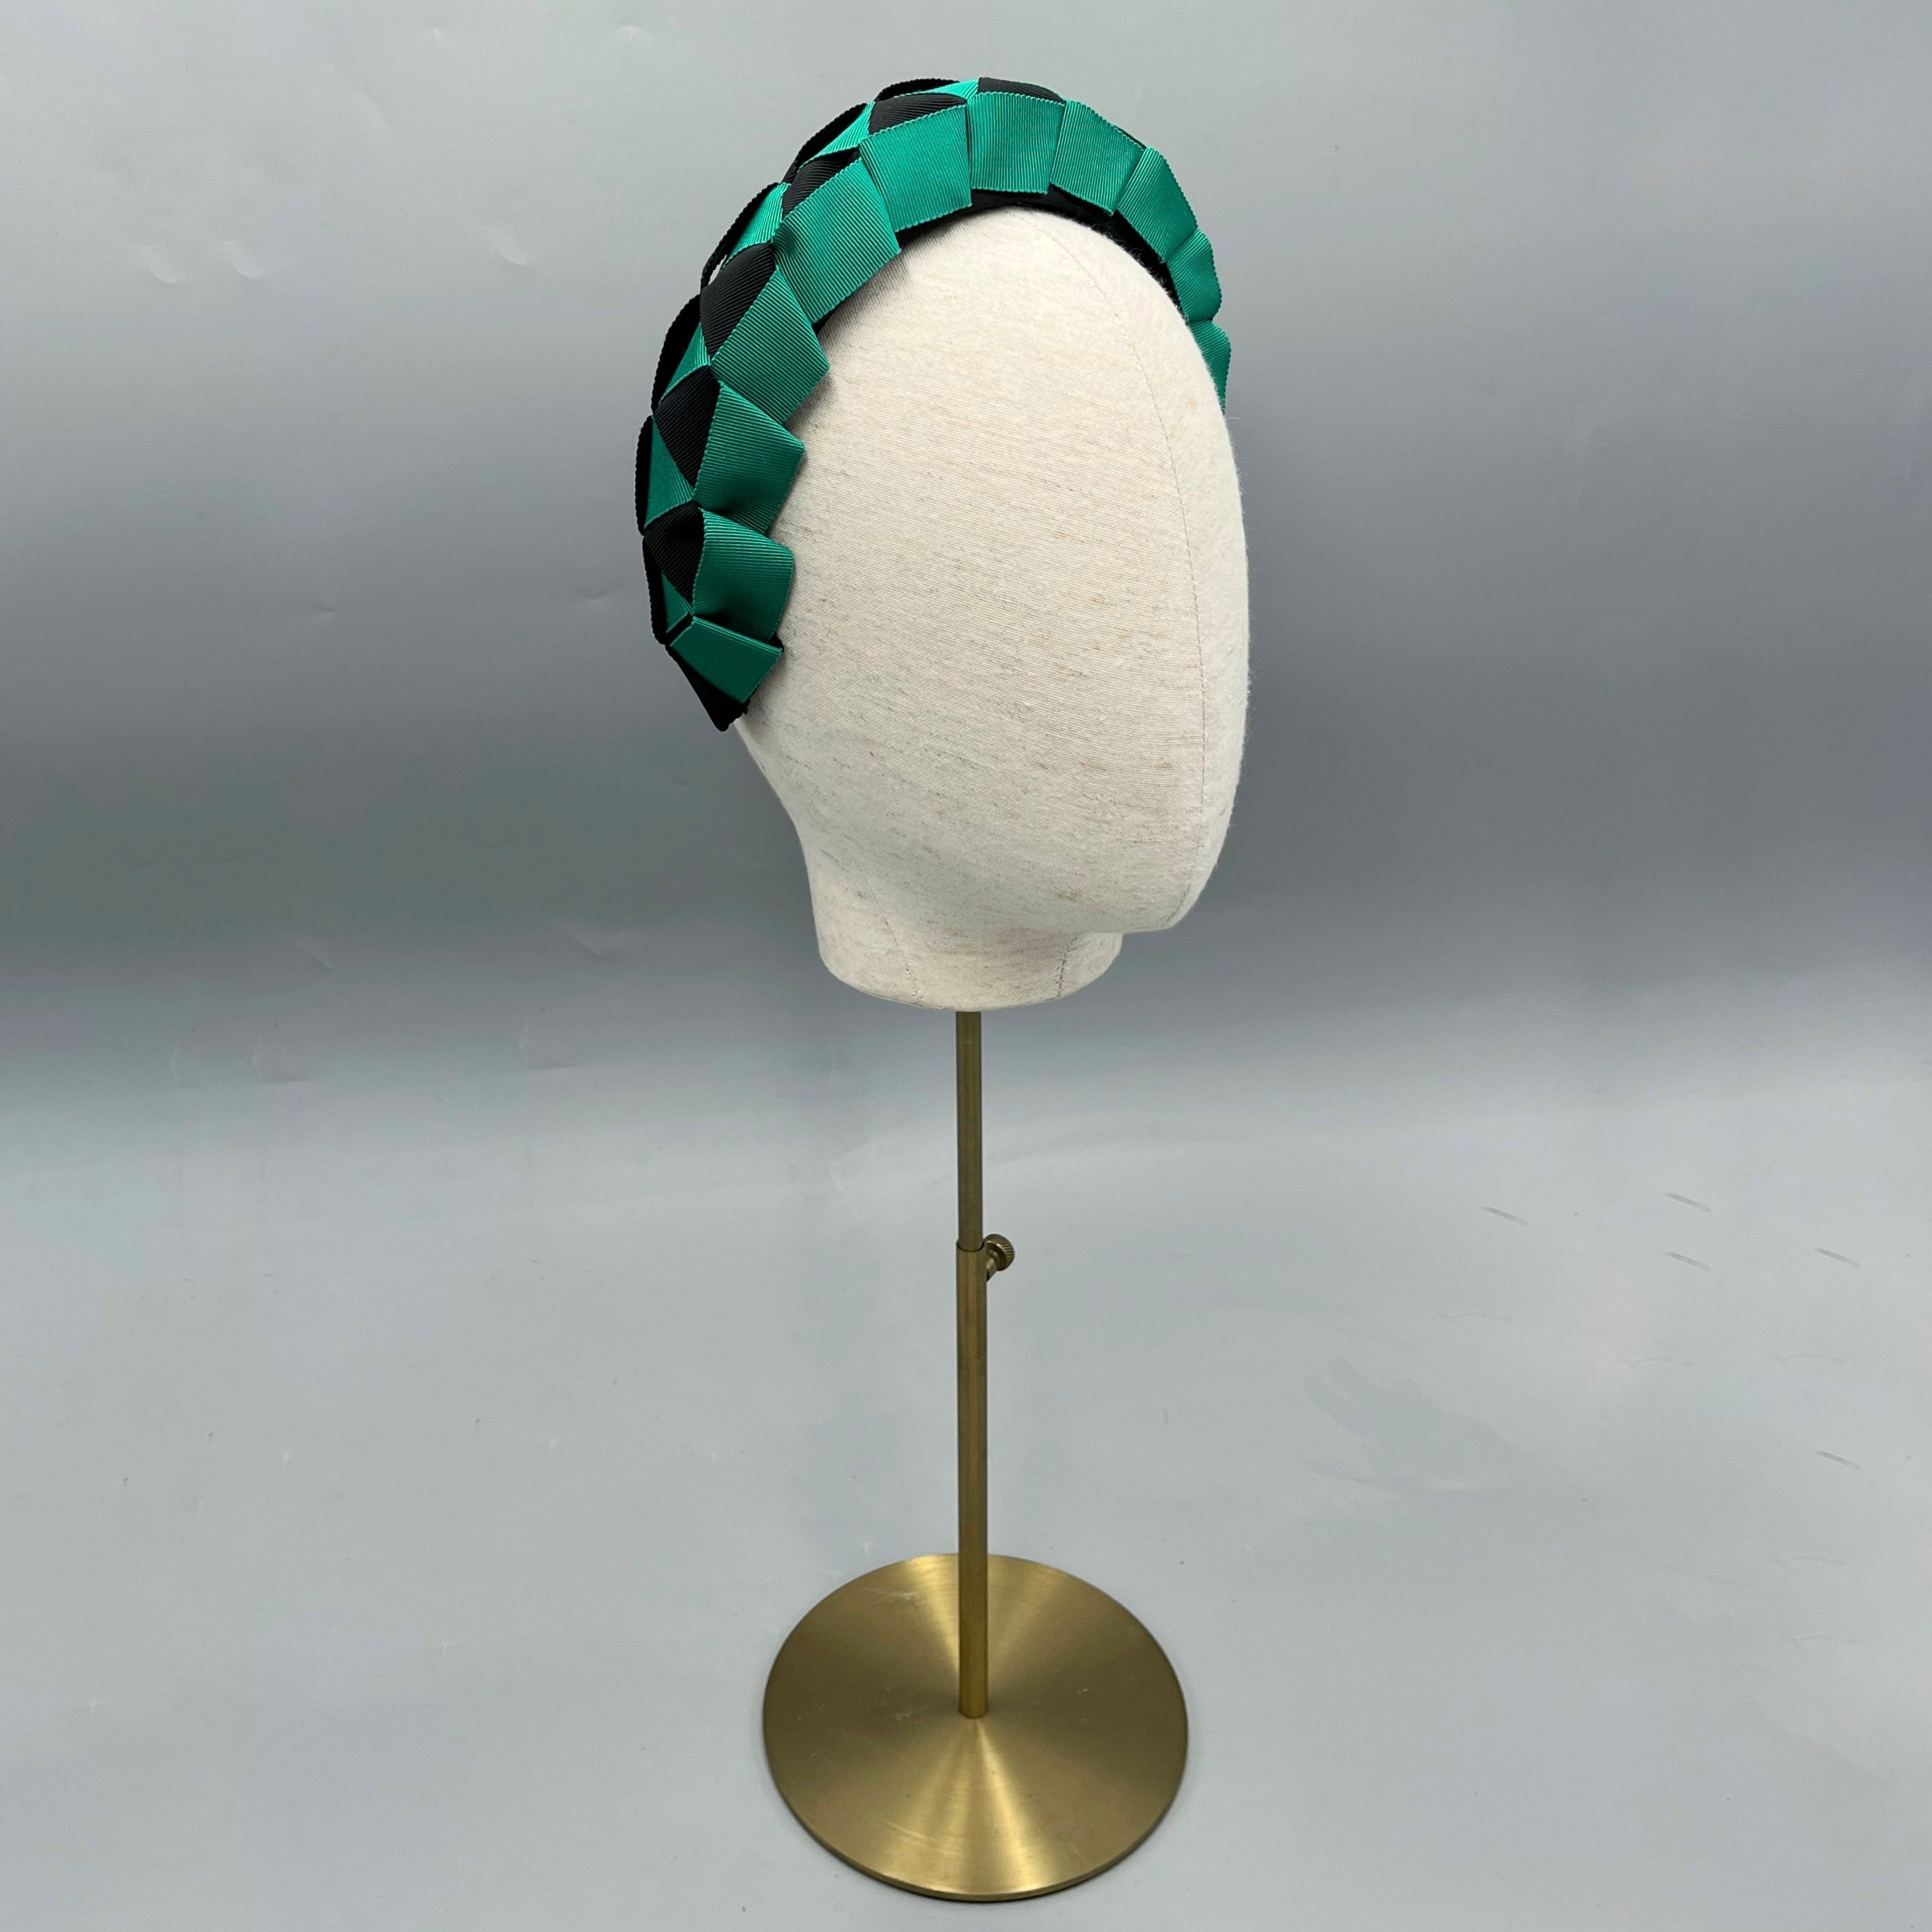 Emerald green and black headband fascinator headpiece origami 